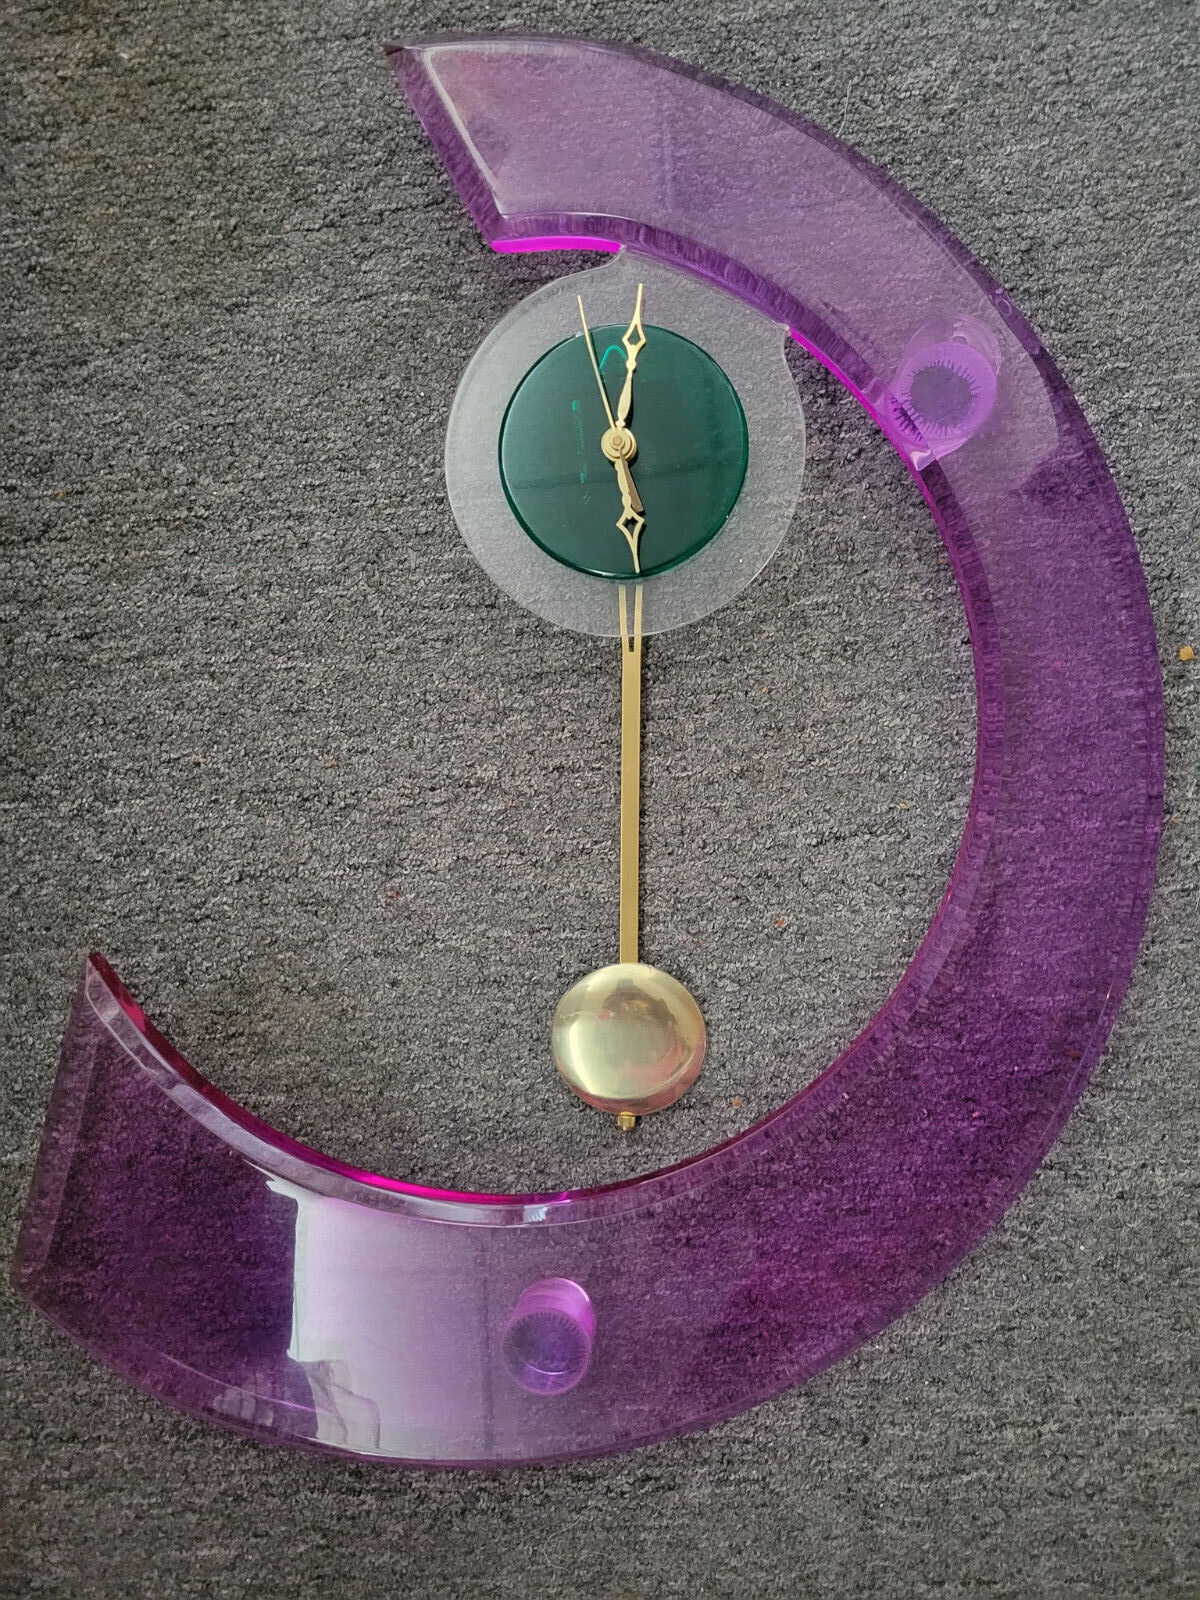 VTG Mid Century Modern C Shaped Wall Clock Pendulum Battery Operated Purple Chic